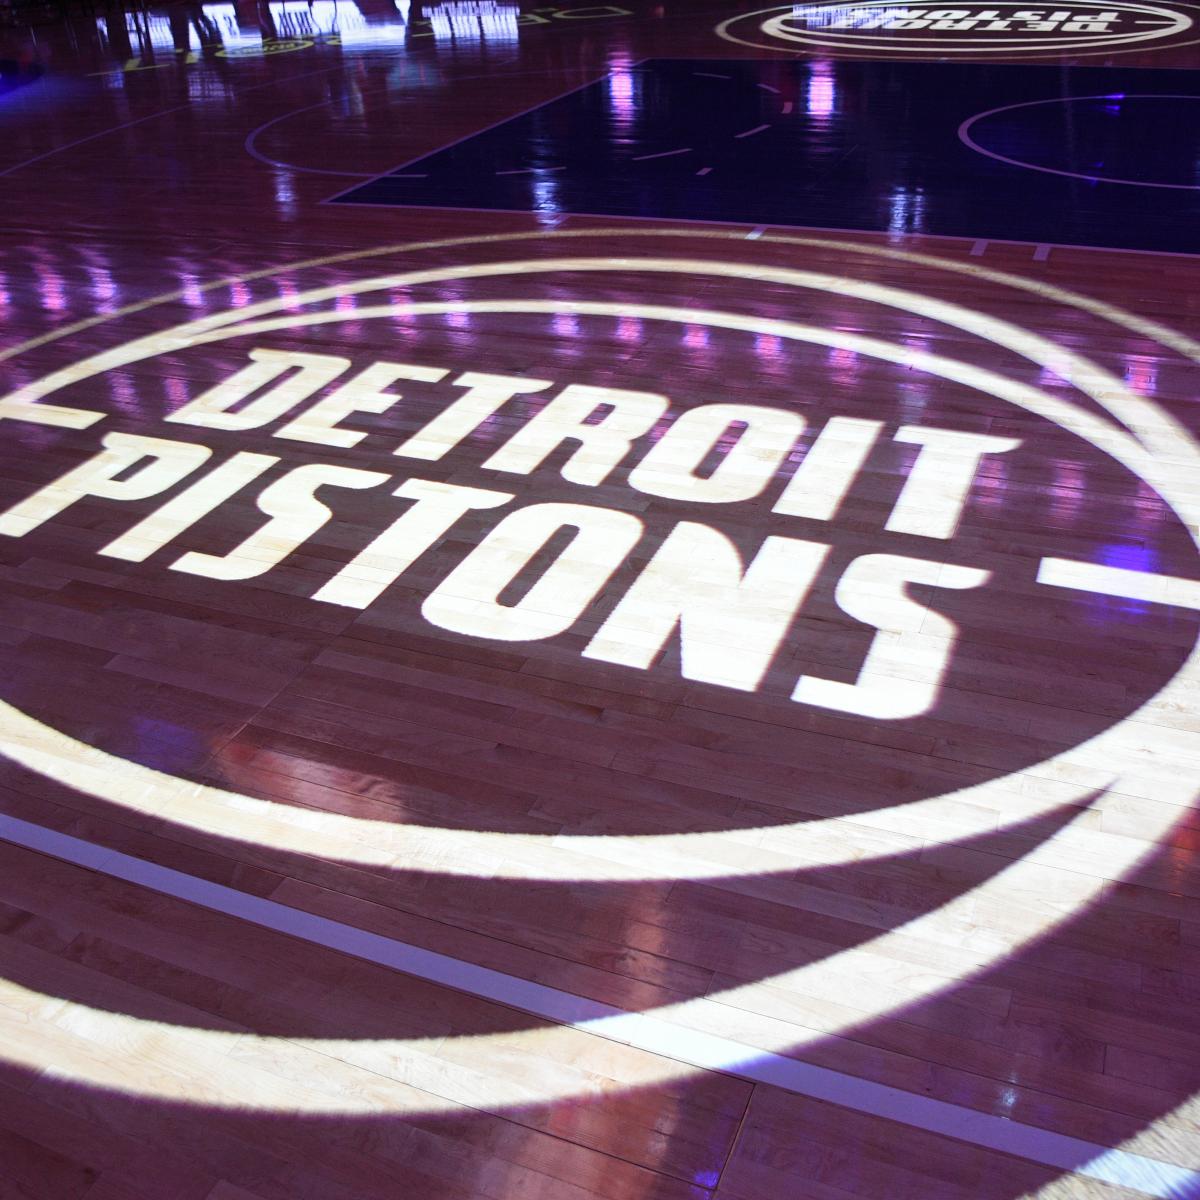 NBA Jam' video game designer rigged Bulls to lose close games to Pistons